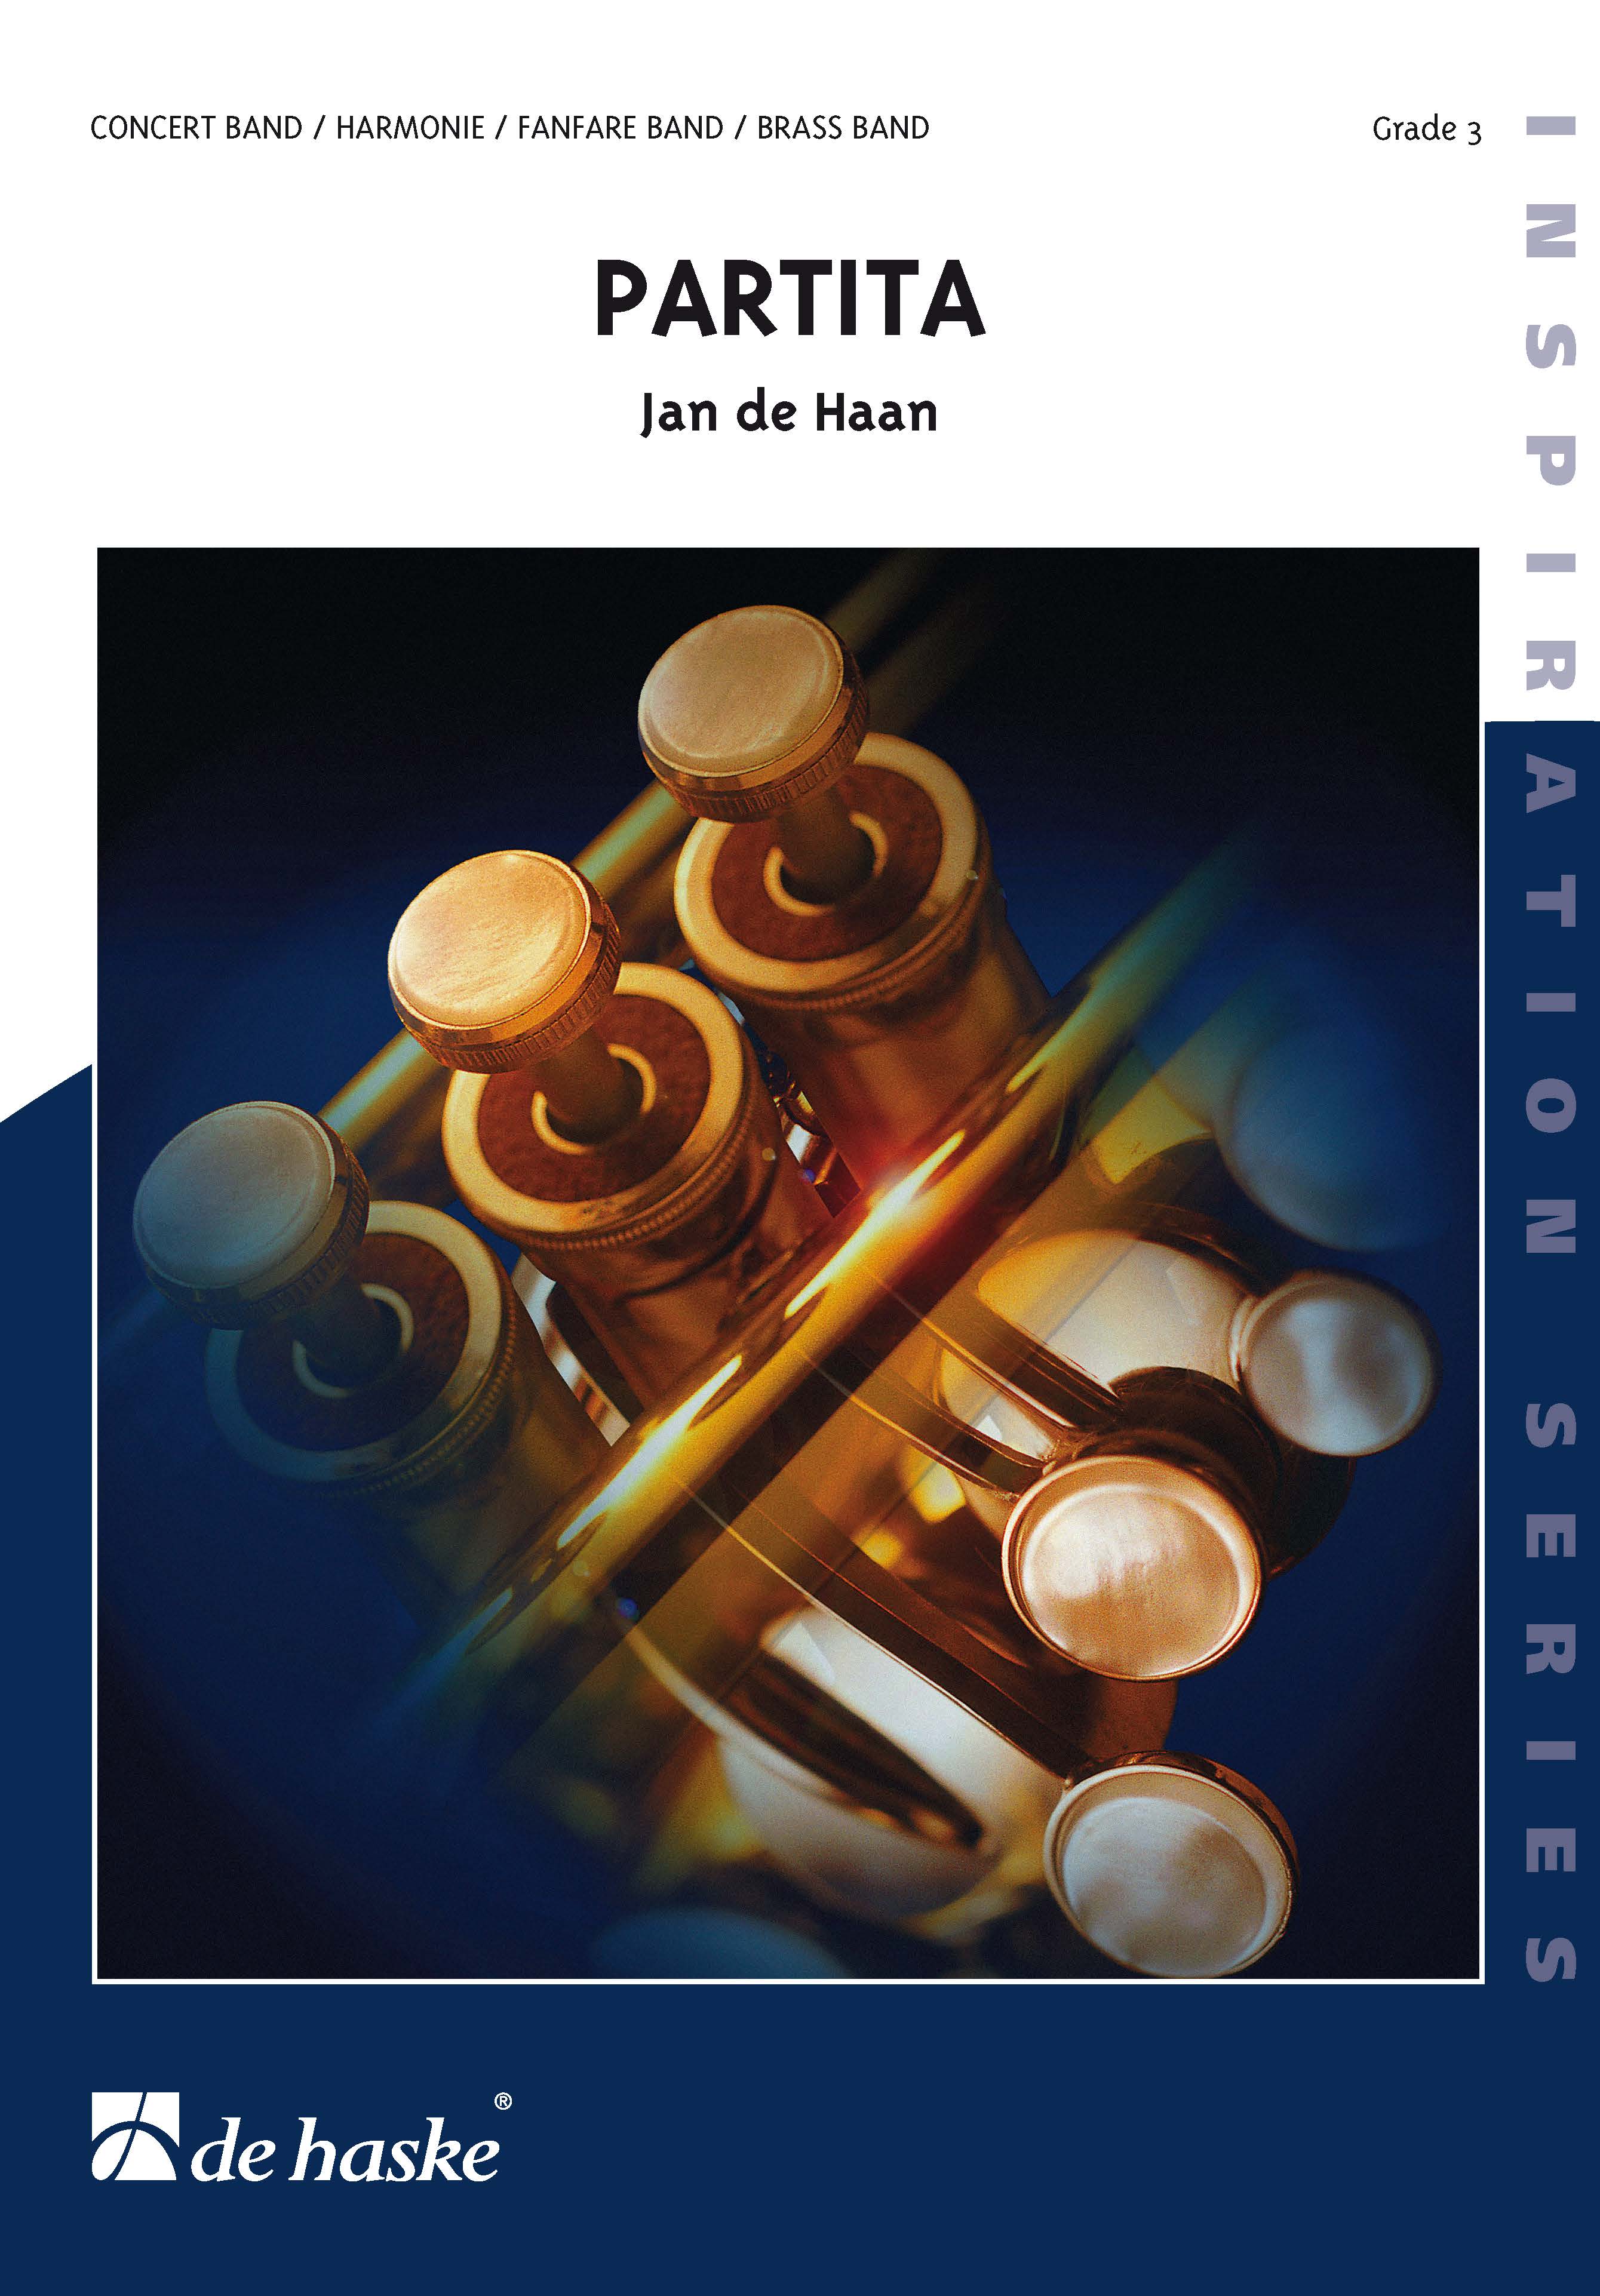 Jan de Haan: Partita: Concert Band: Score & Parts